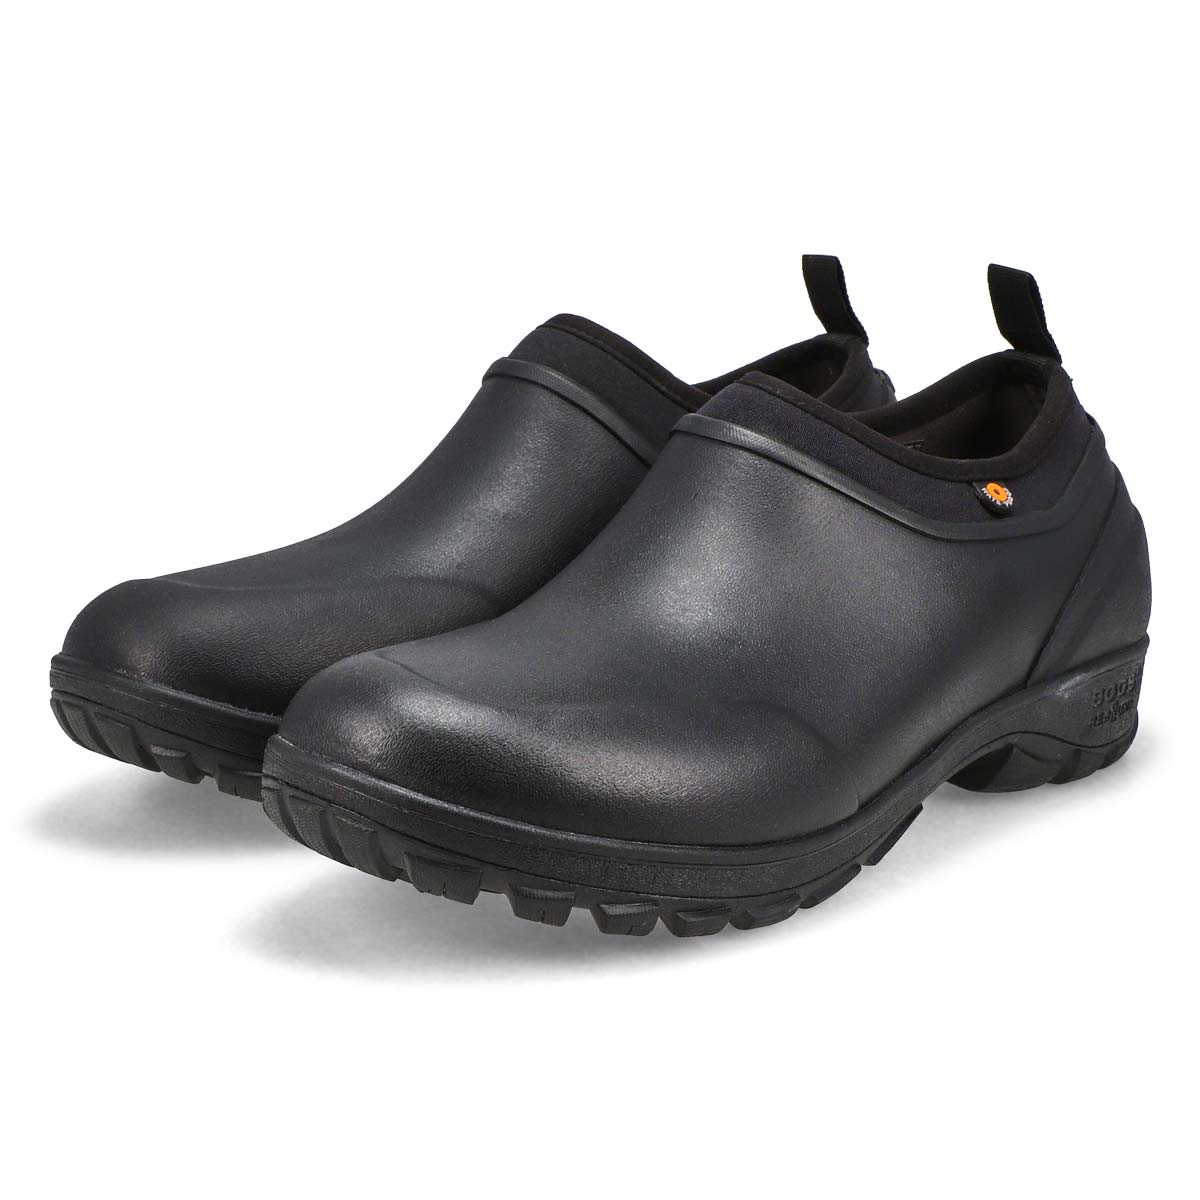 Men's Sauvie Waterproof Slip On Shoe - Black